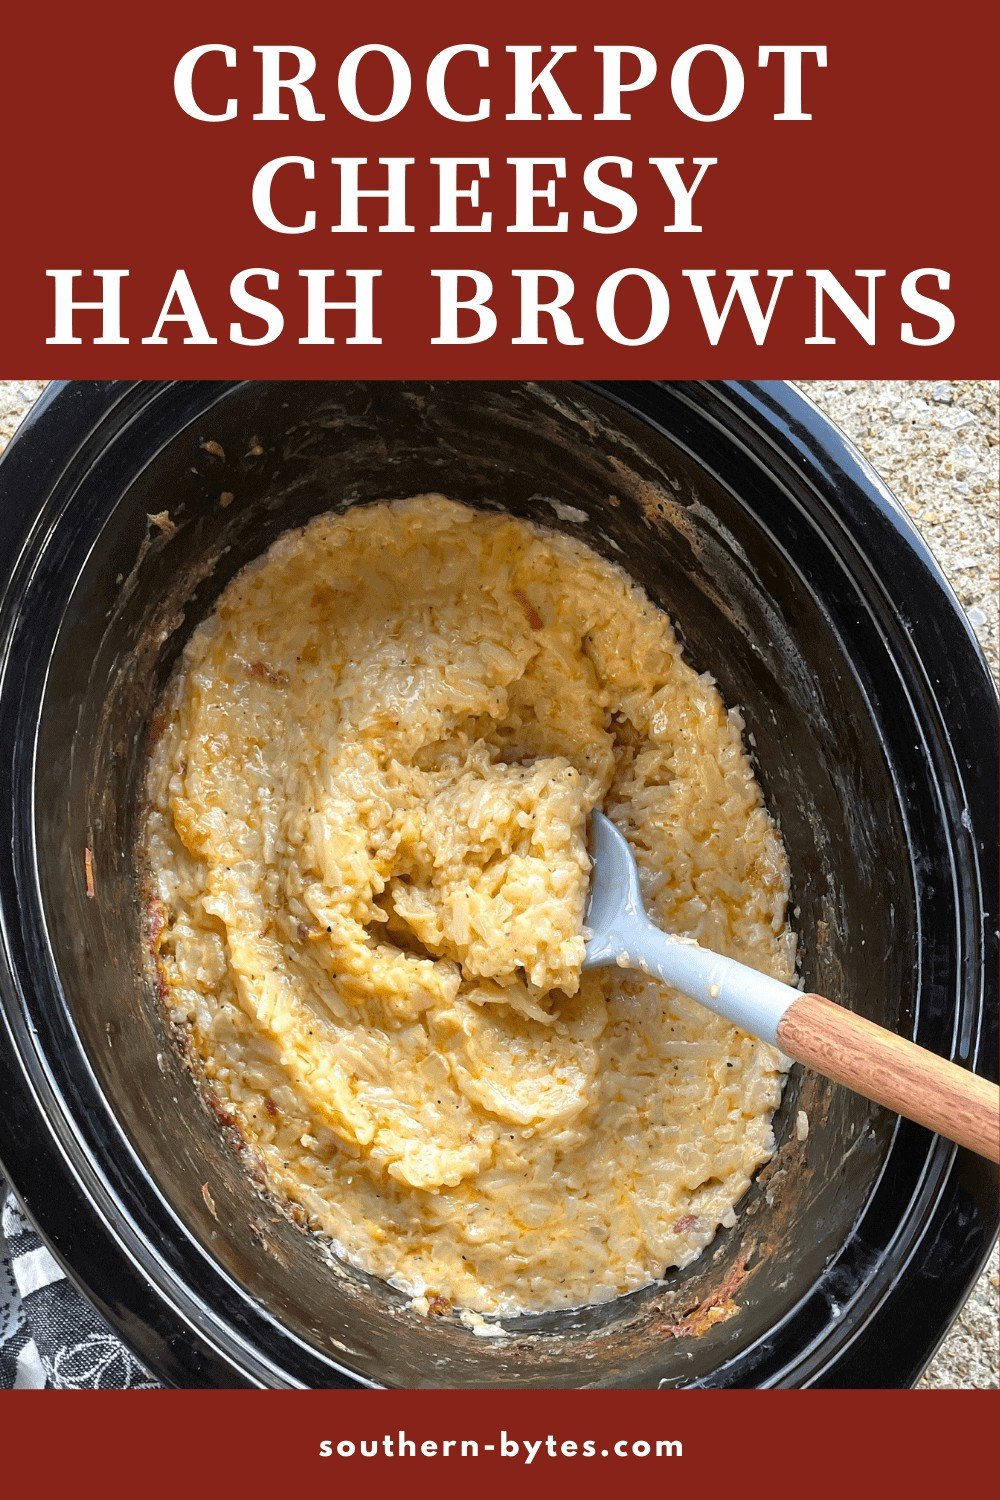 A pin image of a crockpot of cheesy hash brown potatoes.